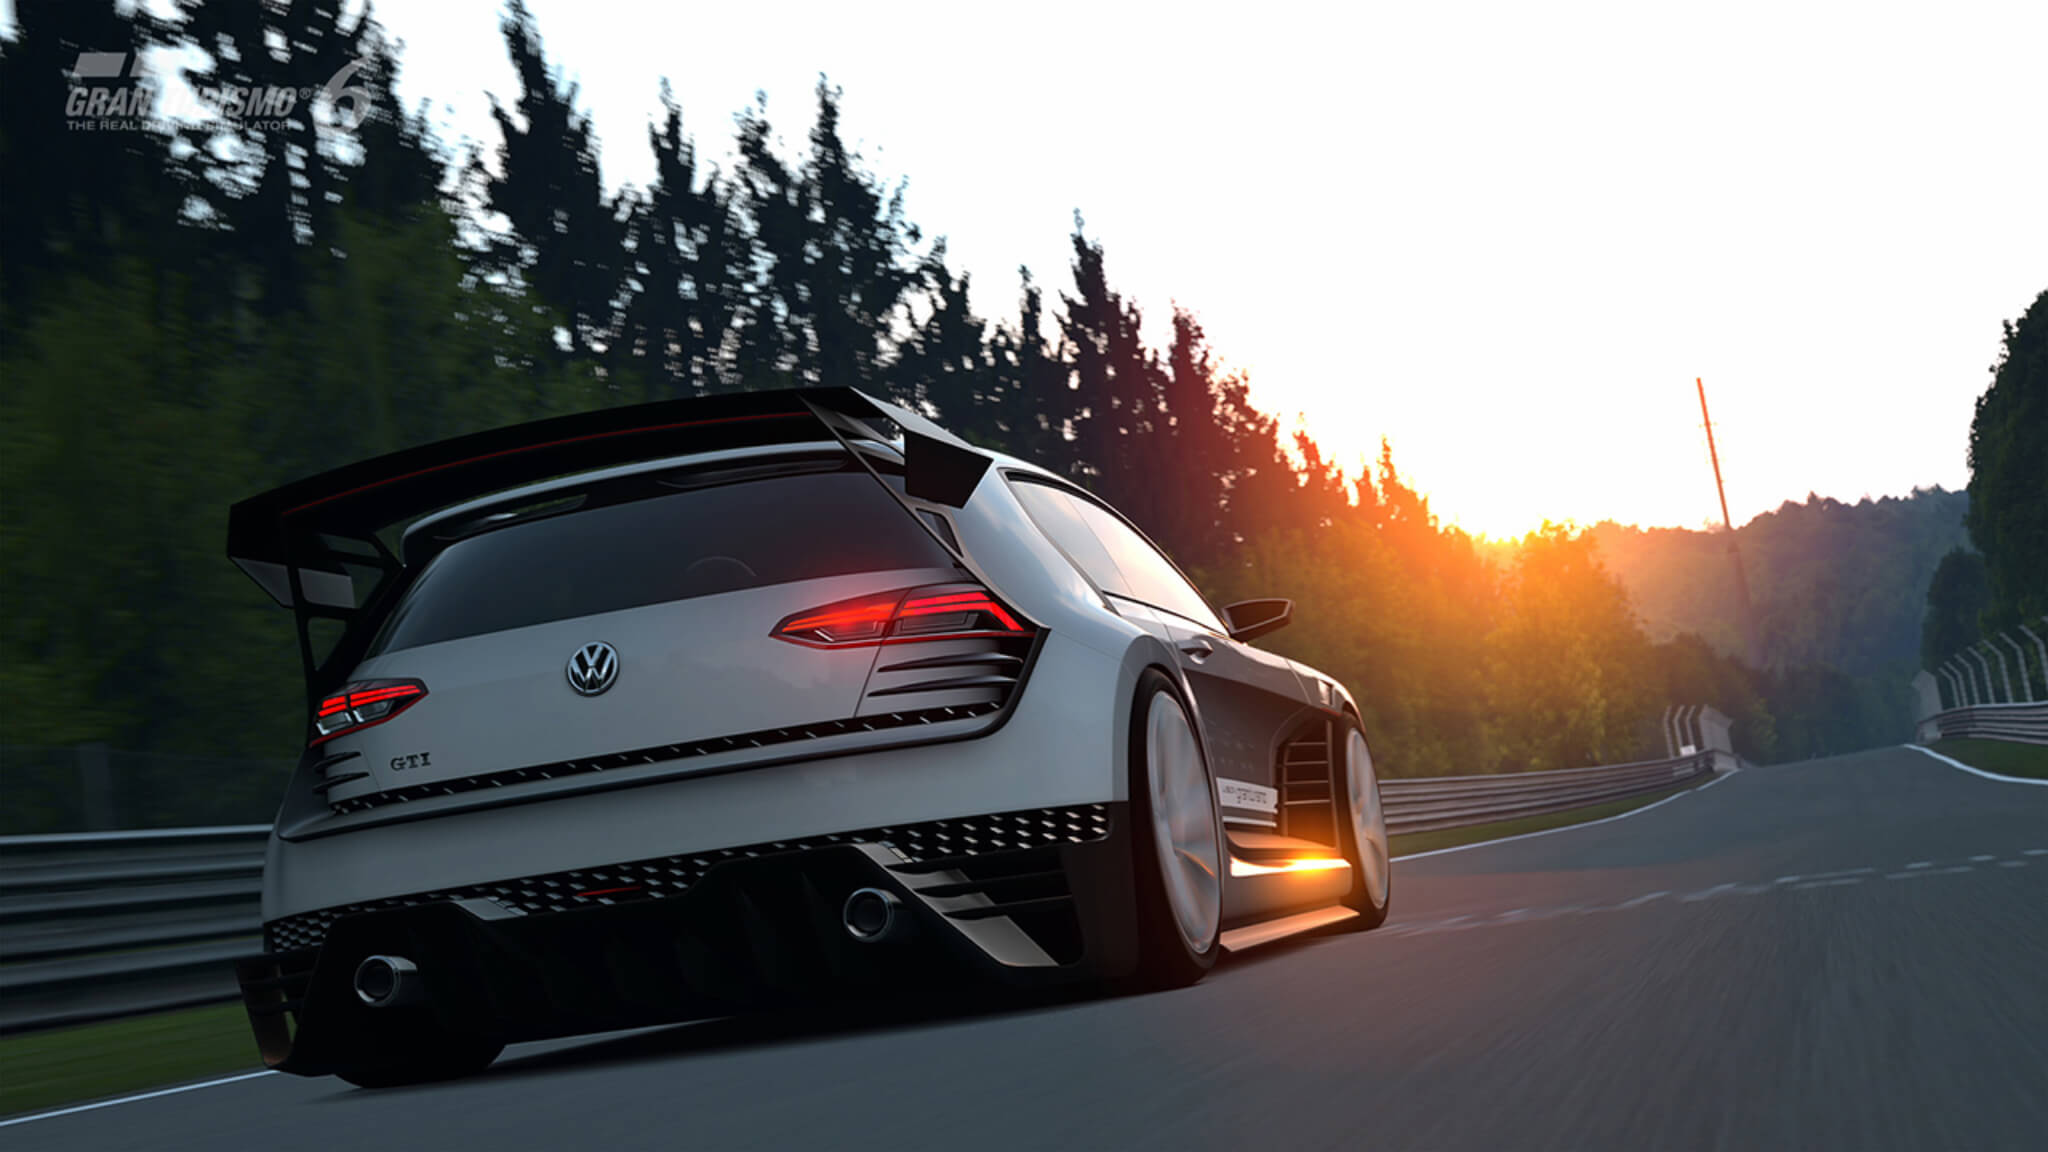 Volkswagen GTI Supersport Vision Gran Turismo traseira